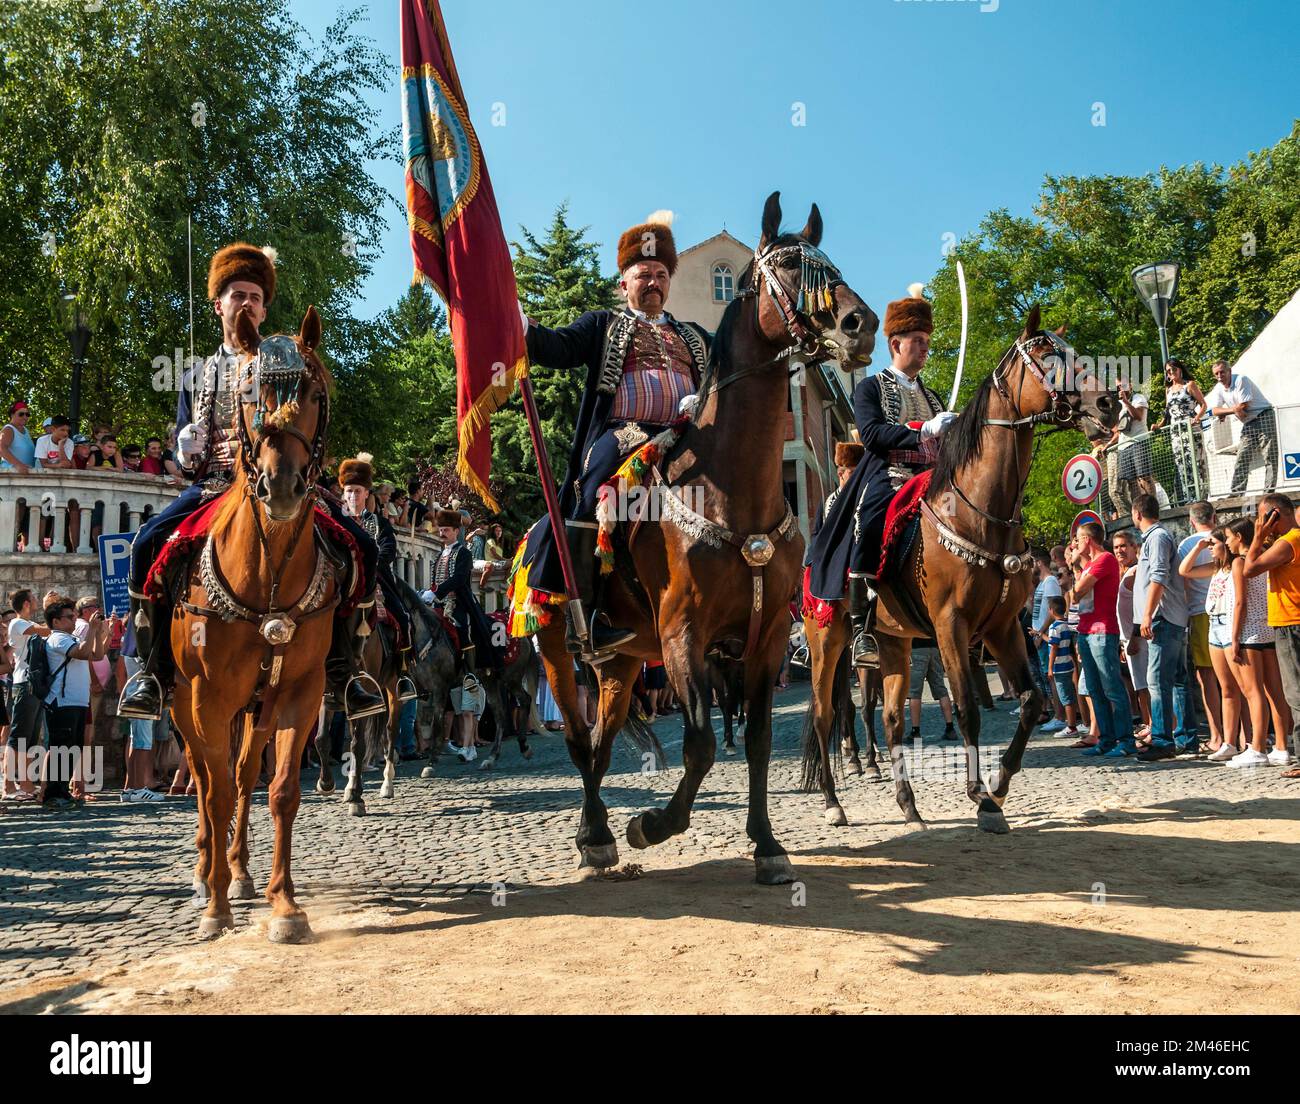 Stipe Bilandzic Cipa, alkar knight standard bearer is riding his horse followed by his henchmen at 300.th alka festival in signo (sinj), Croatia held Stock Photo